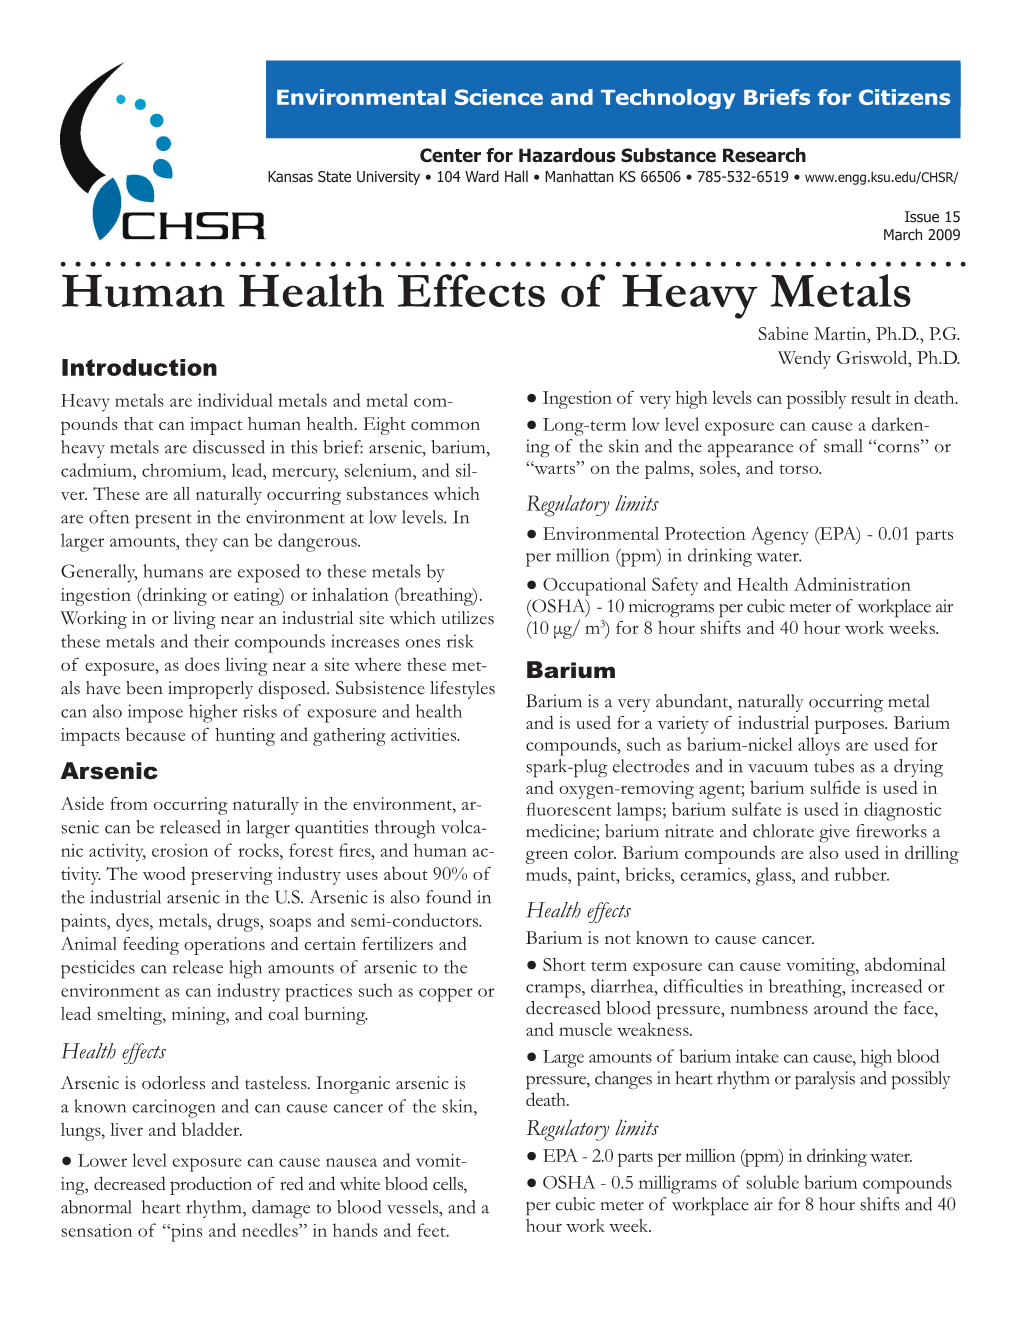 Human Health Effects of Heavy Metals Sabine Martin, Ph.D., P.G